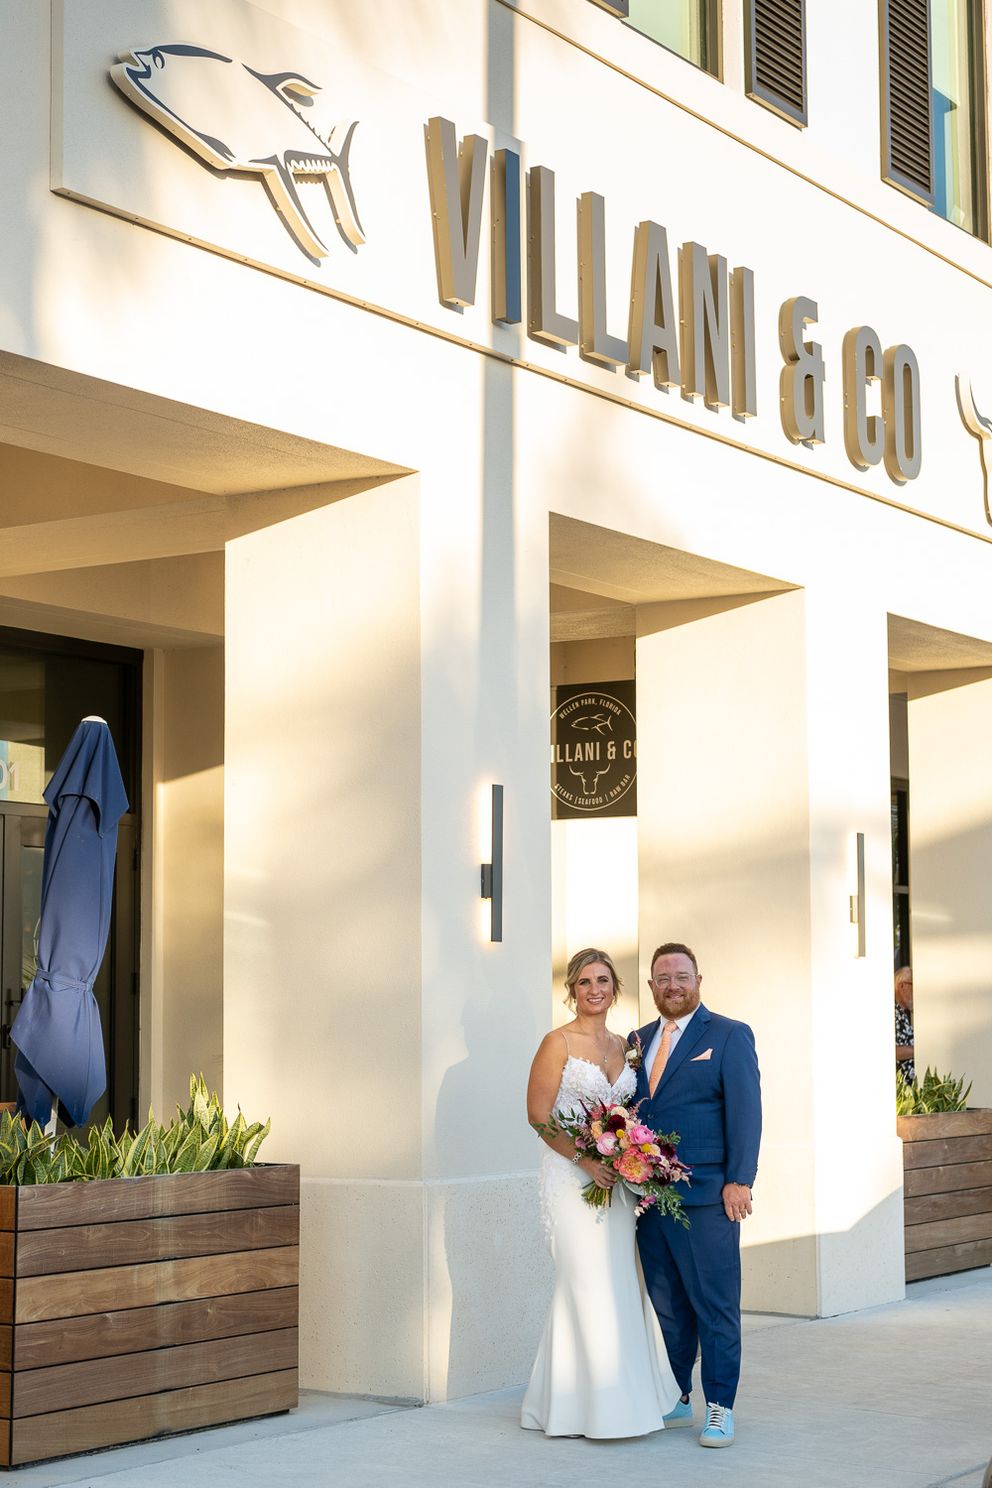 Wellen Park Wedding reception at Villani & Co